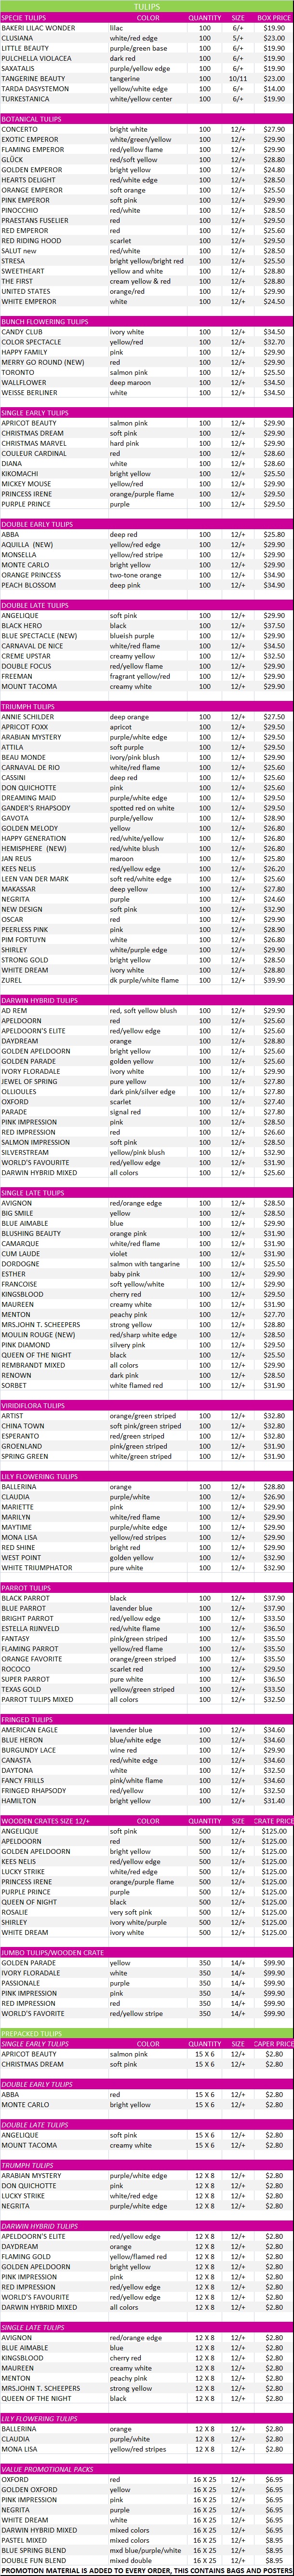 Tulip Price List, Fall 2015